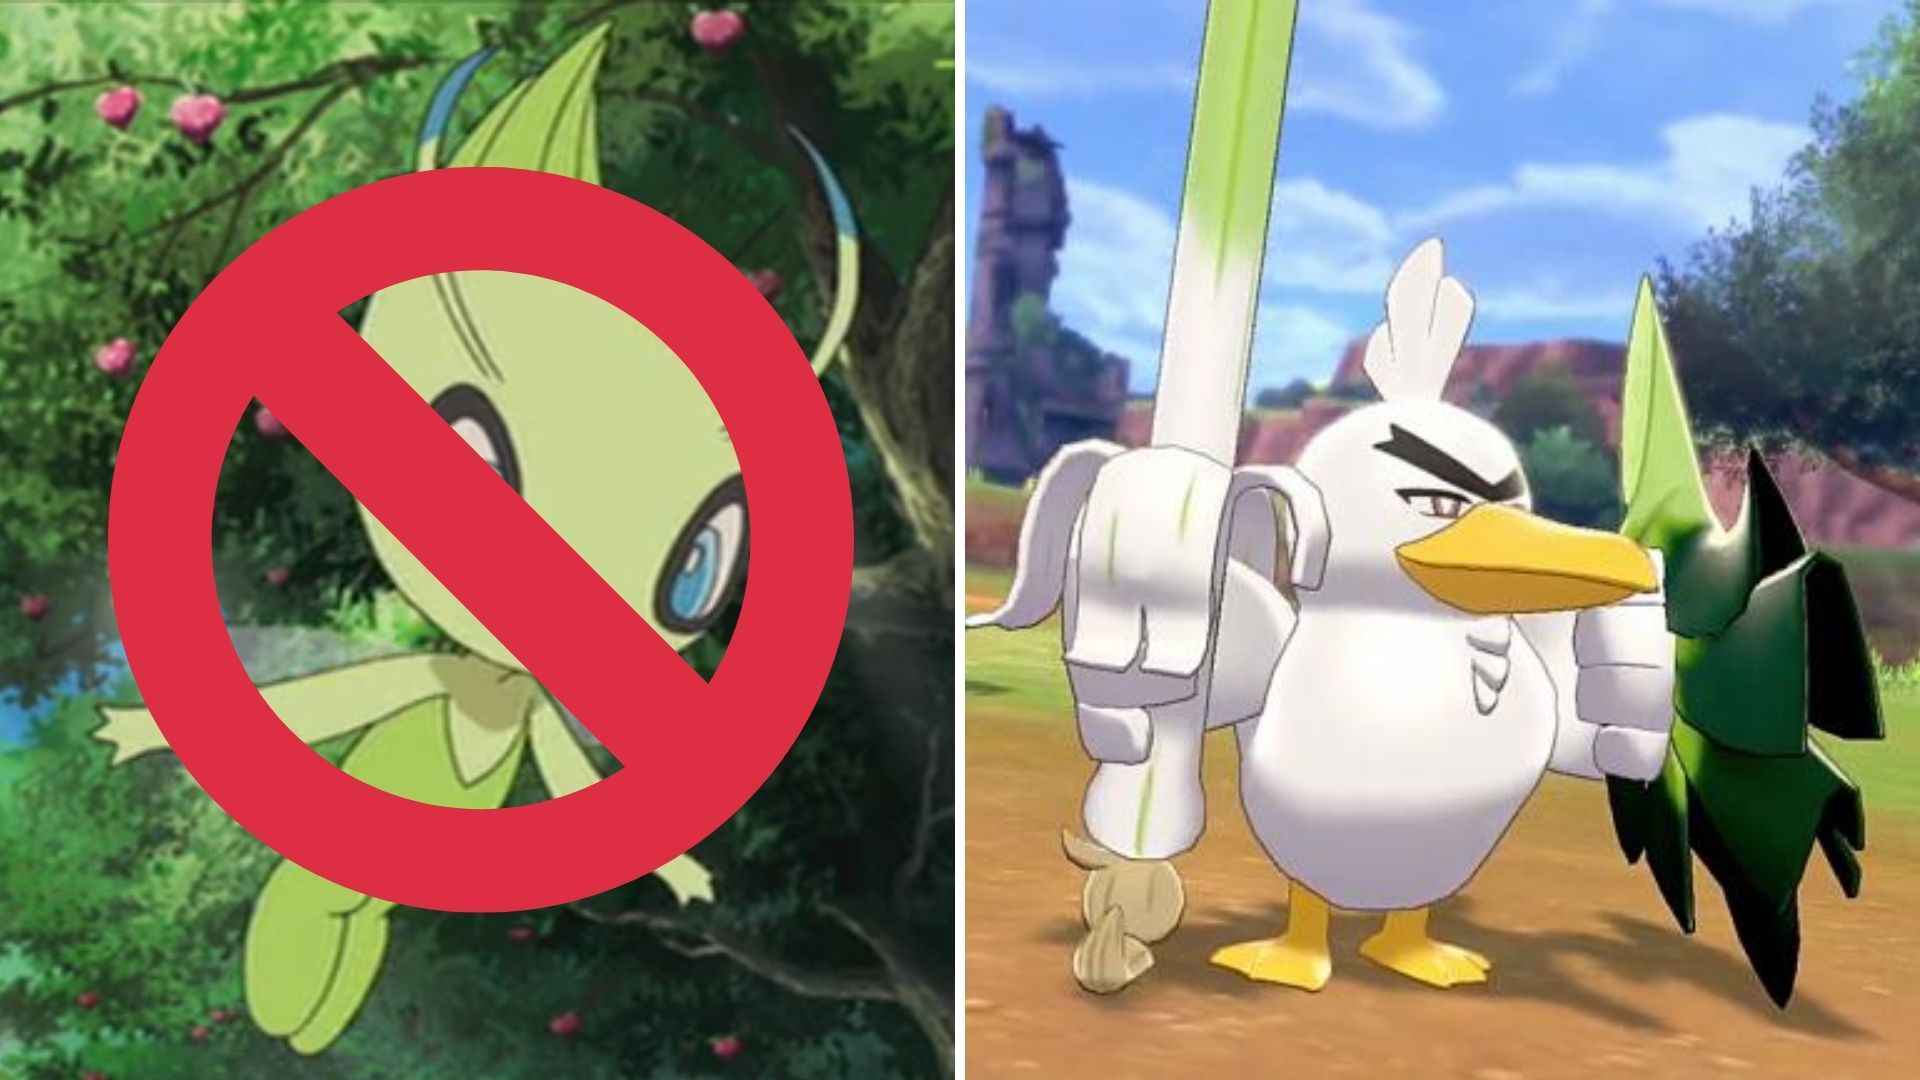 Fact checking the Pokemon Sword and Shield Pokedex controversy